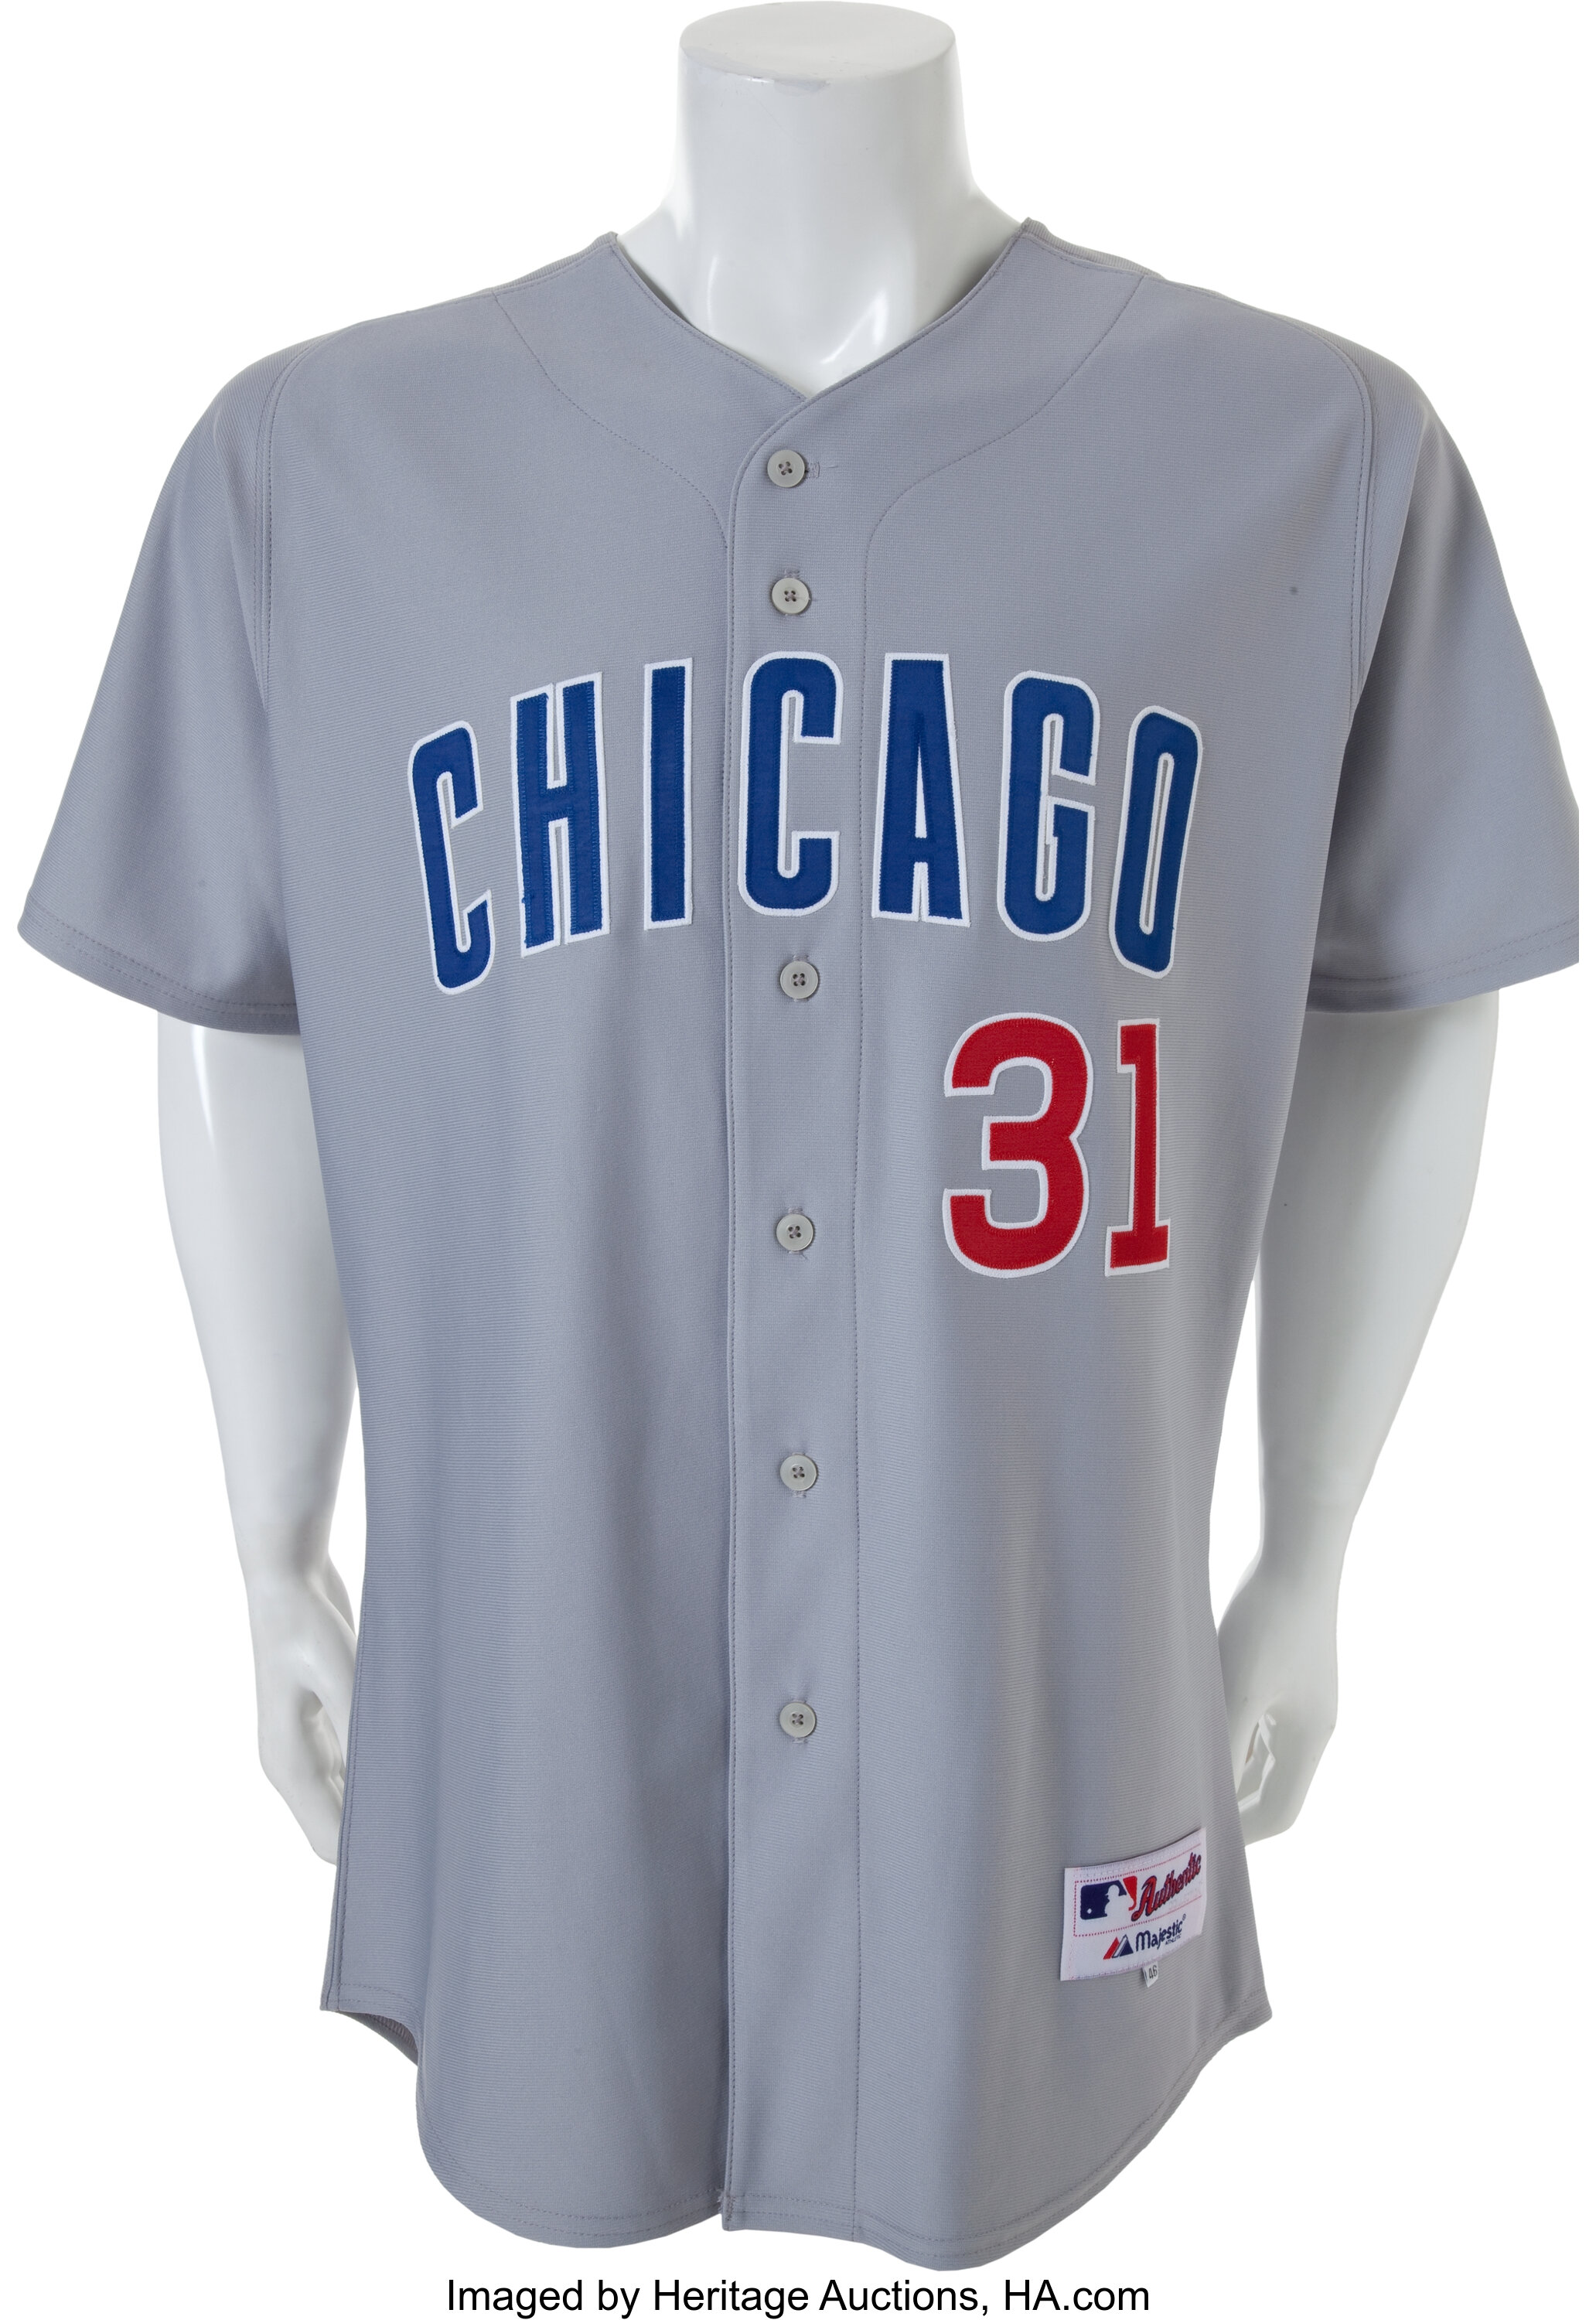 Greg Maddux player worn jersey patch baseball card (Chicago Cubs